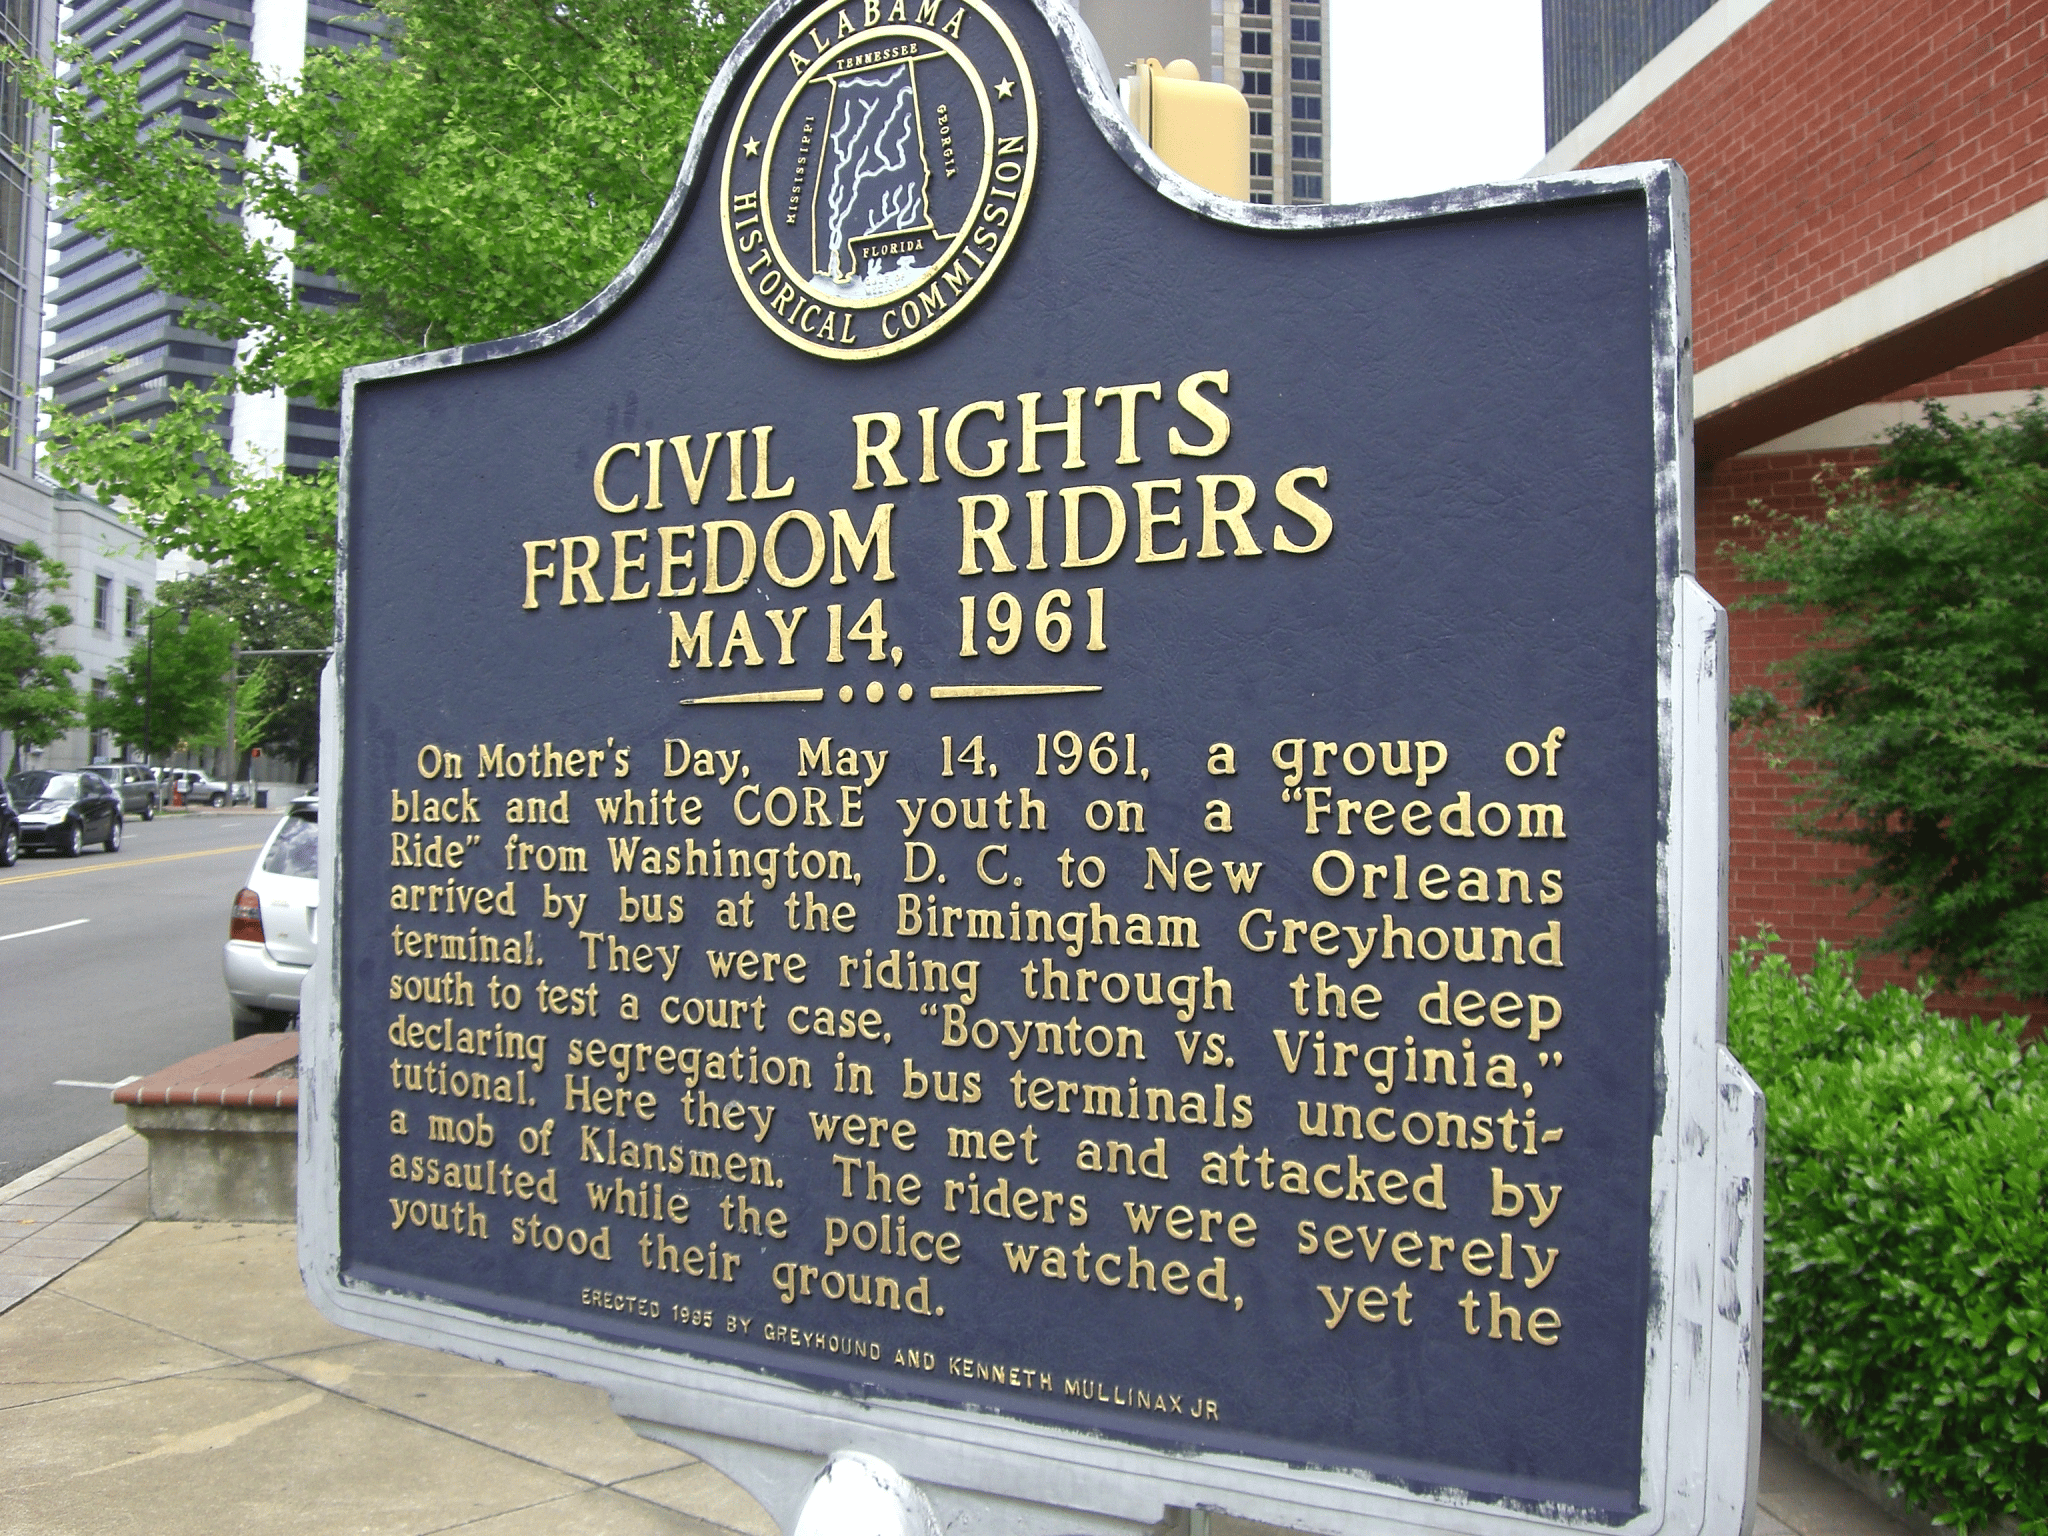 Plaque commemorating the Freedom Riders